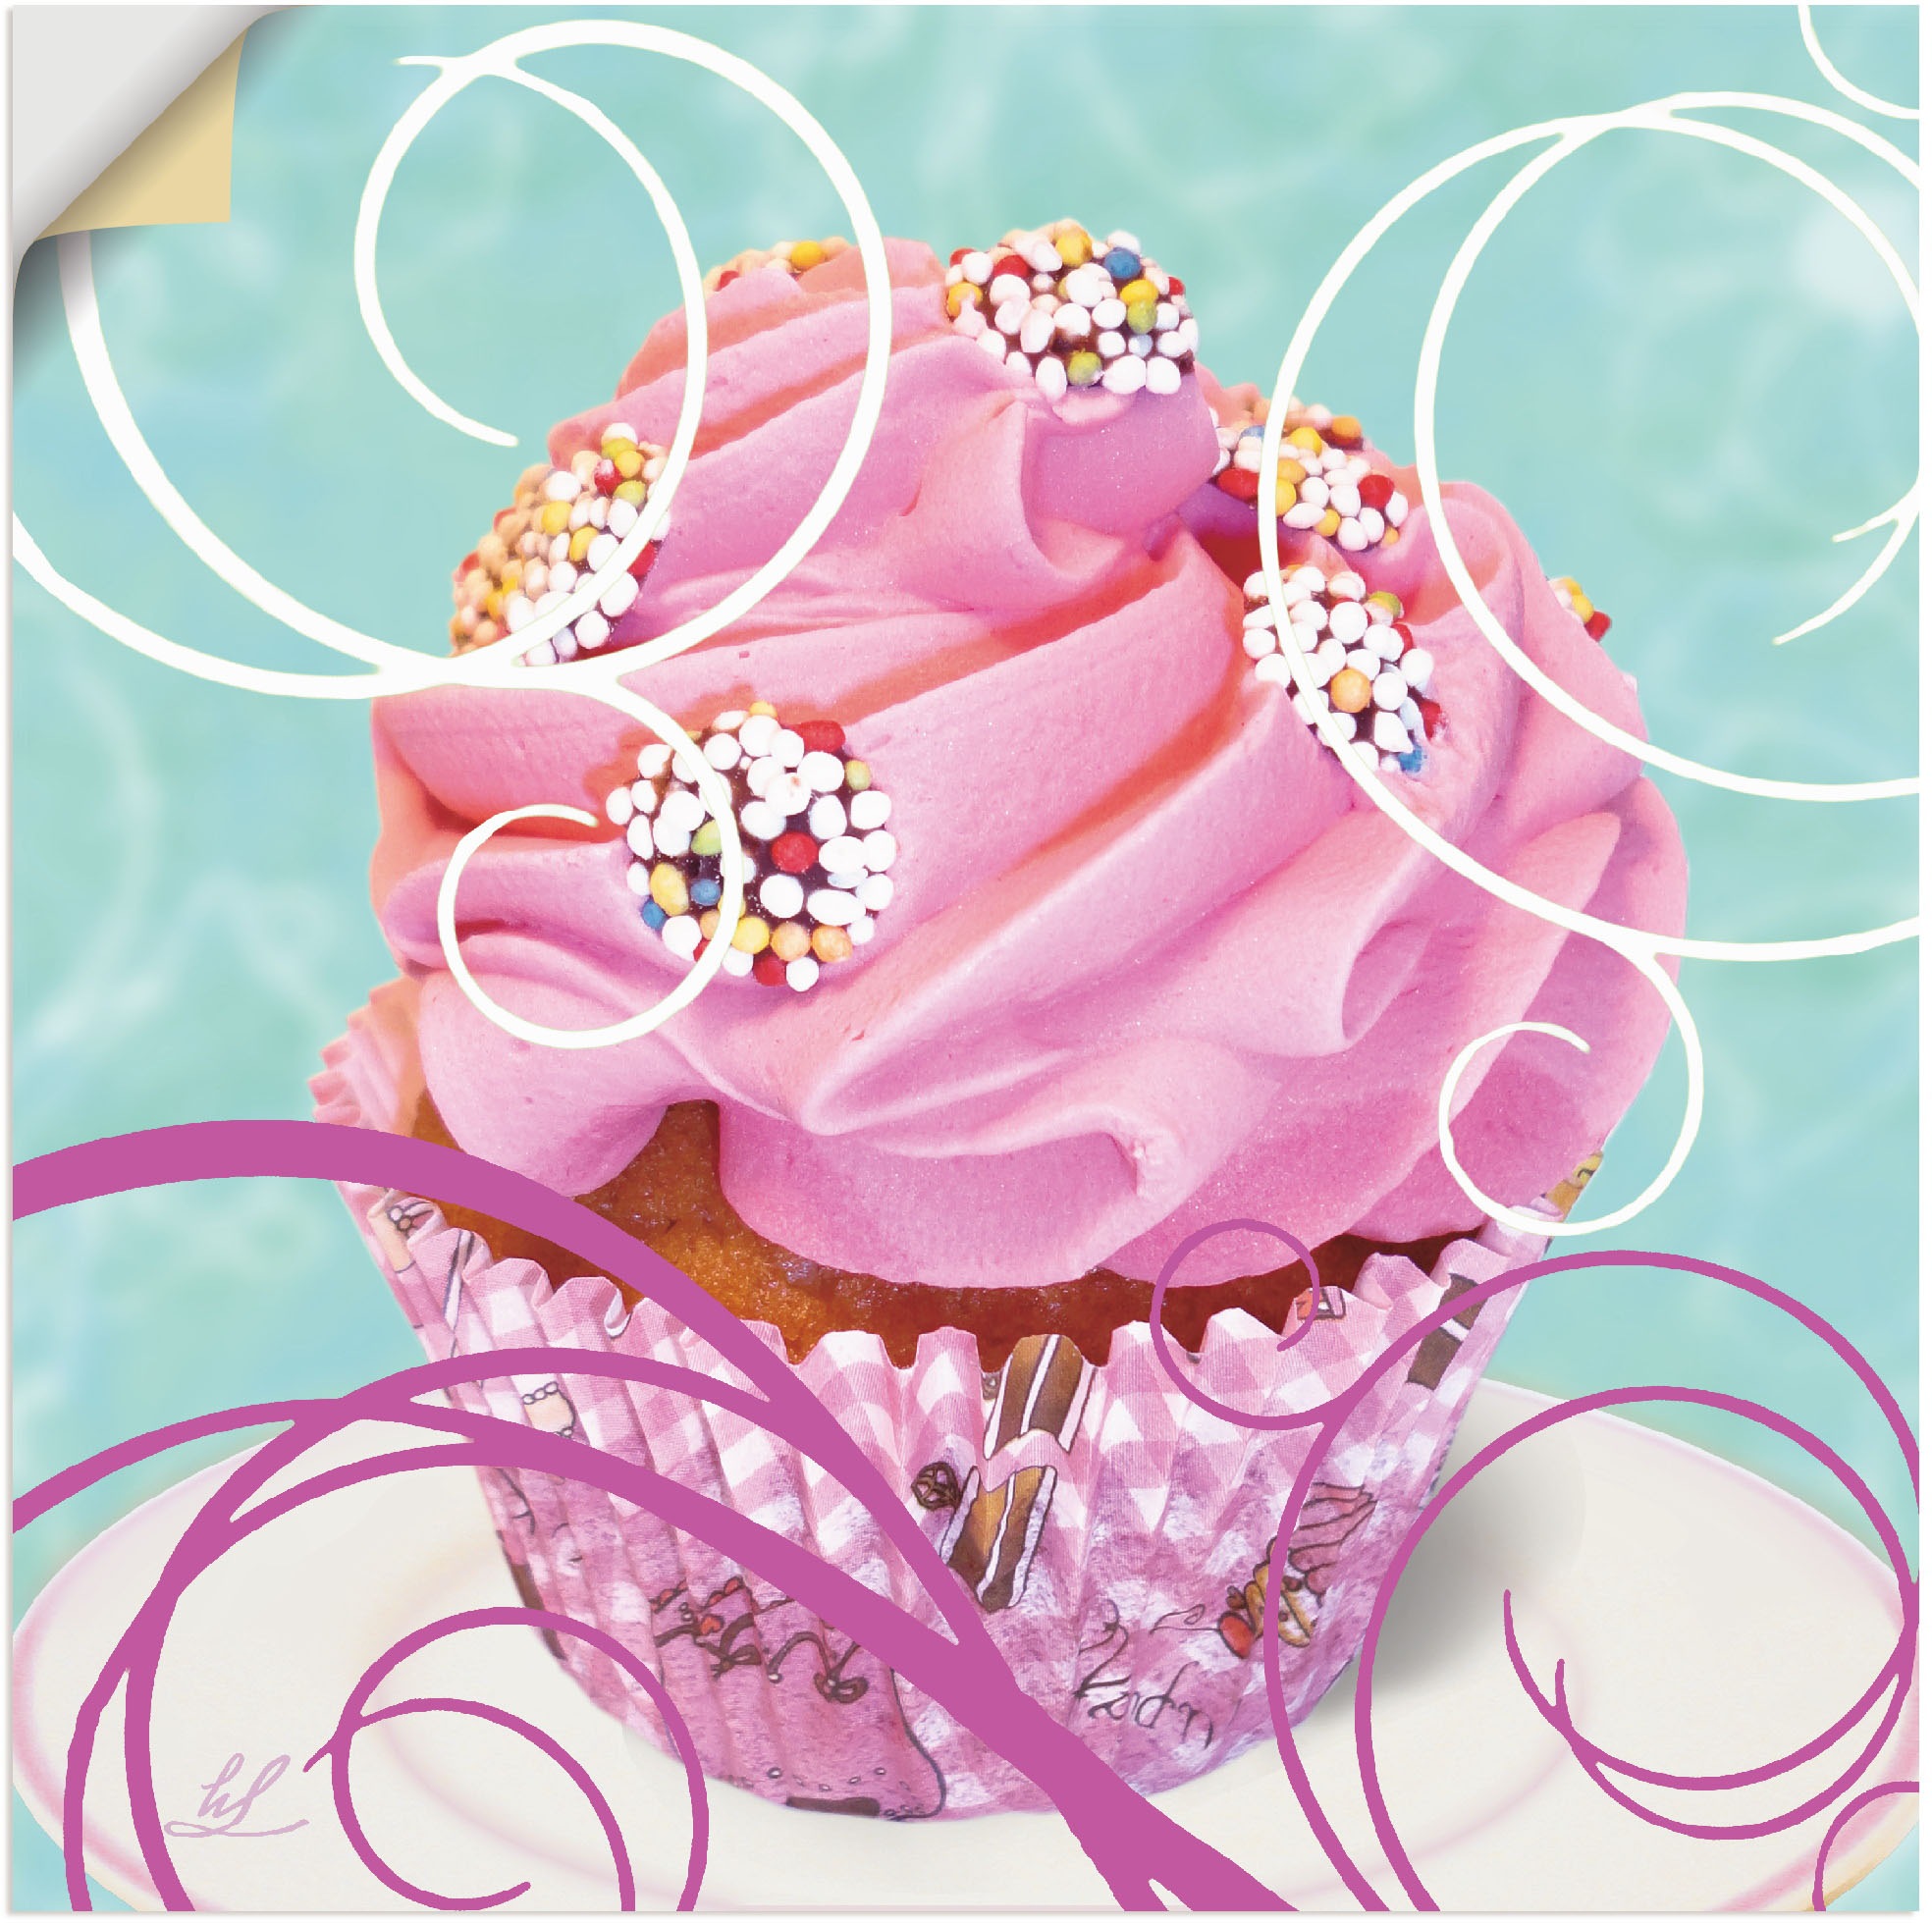 Artland Wandbild »Cupcake auf petrol - Kuchen«, Süßspeisen, (1 St.), als  Alubild, Leinwandbild, Wandaufkleber oder Poster in versch. Größen bequem  kaufen